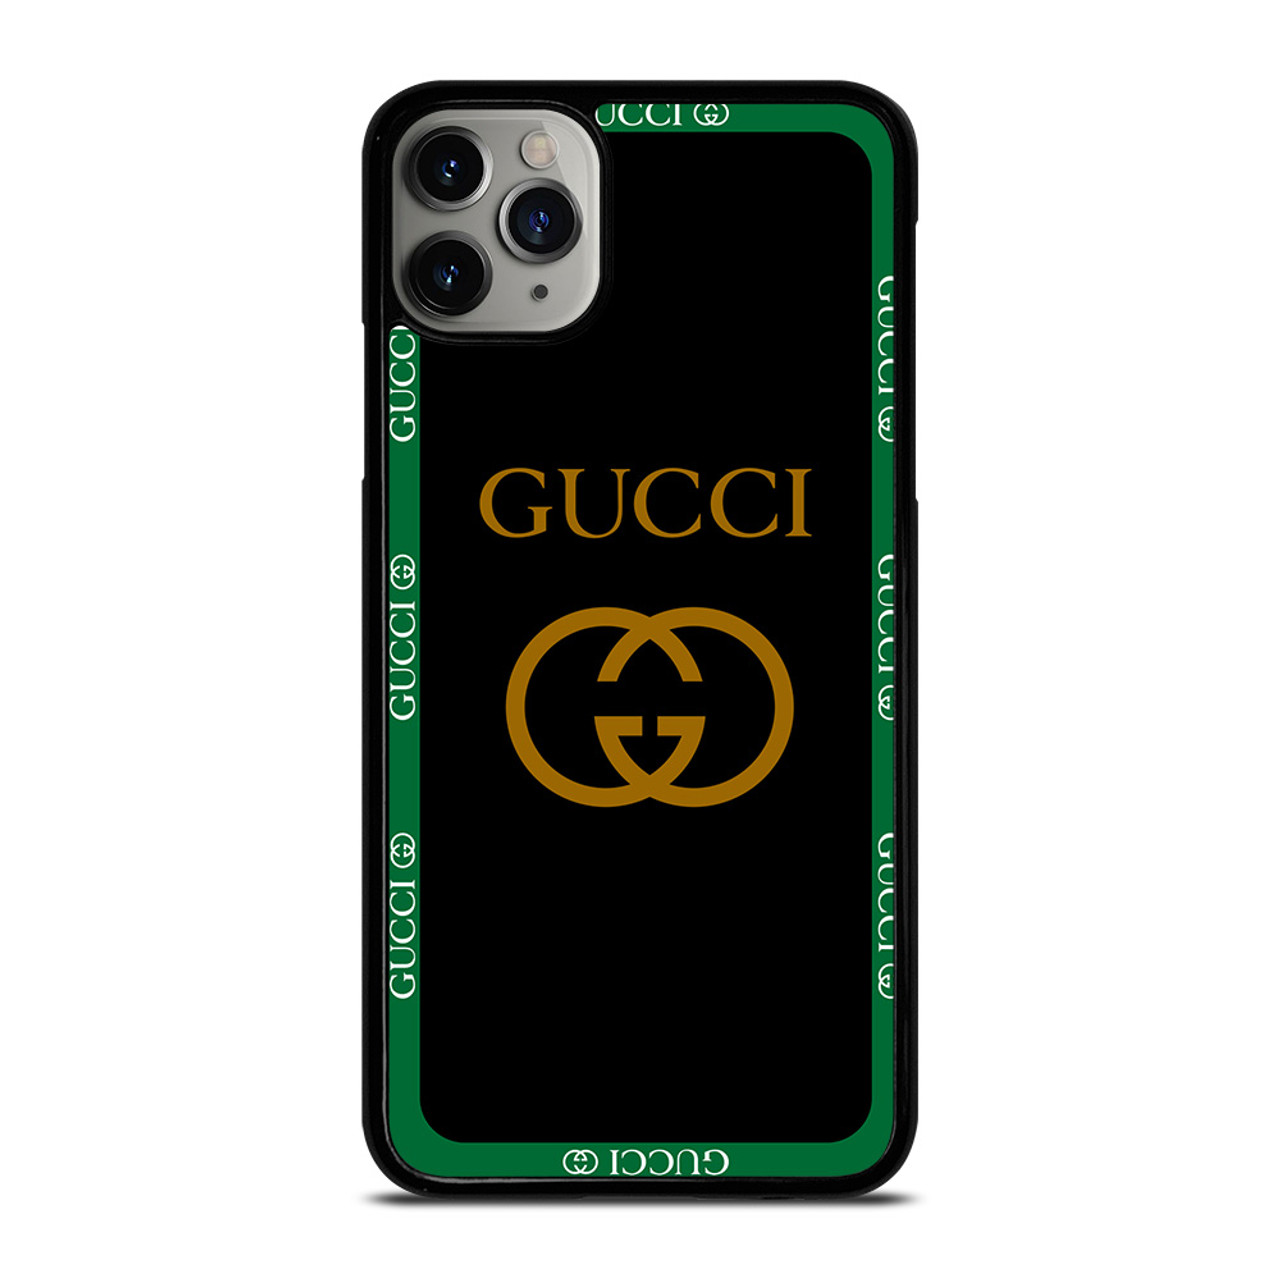 GUCCI ROUND BLACK.jpg iPhone 11 Pro Max Case Cover